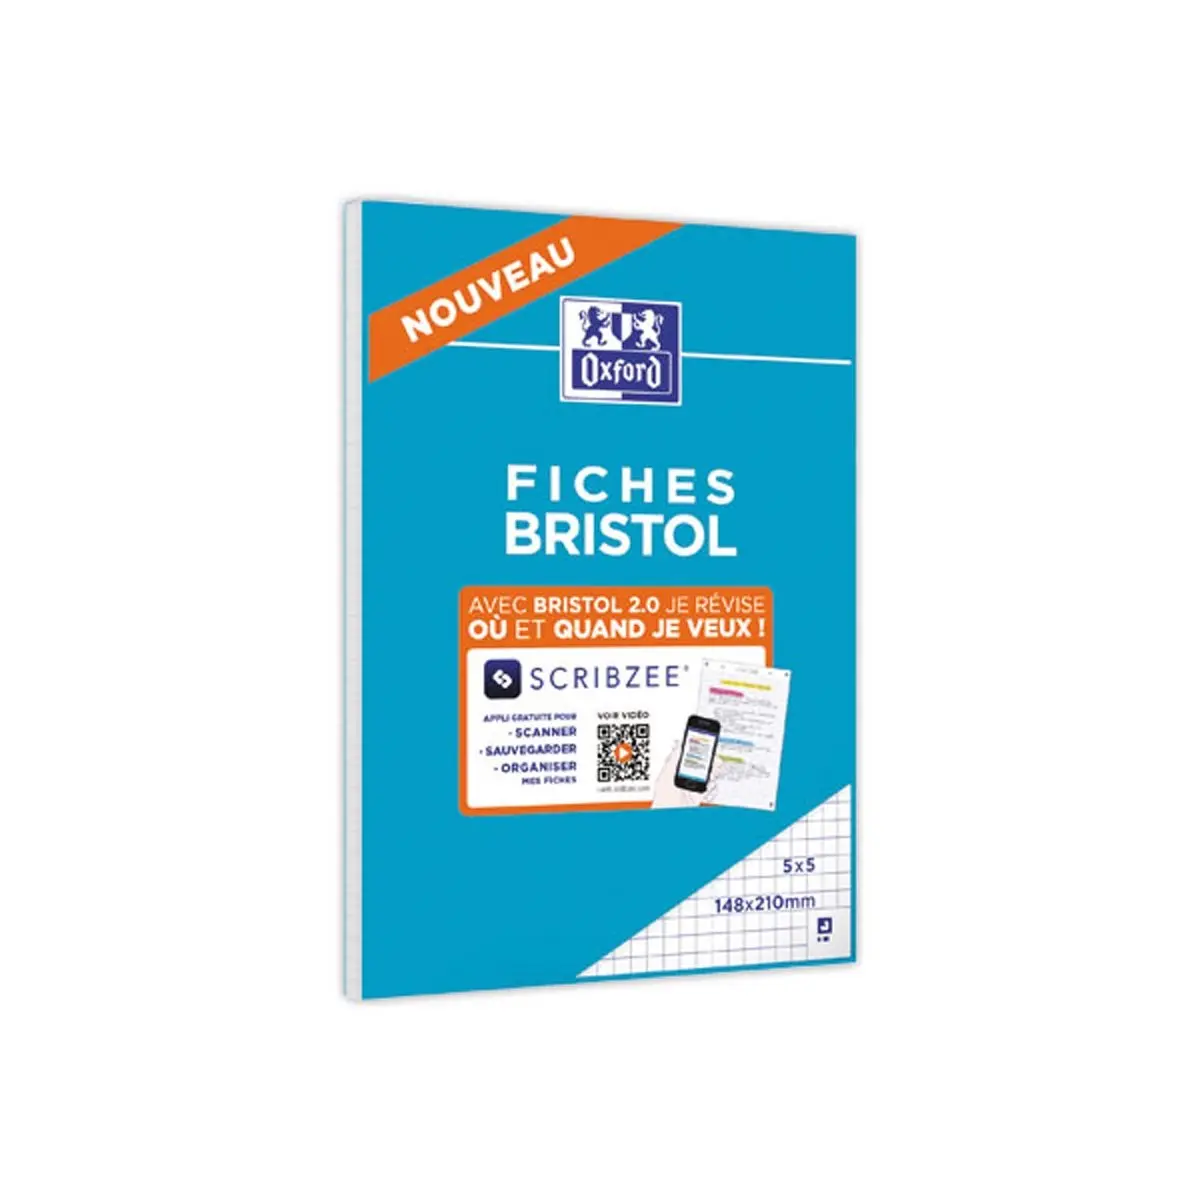 Fiches bristol - Papeterie Michel